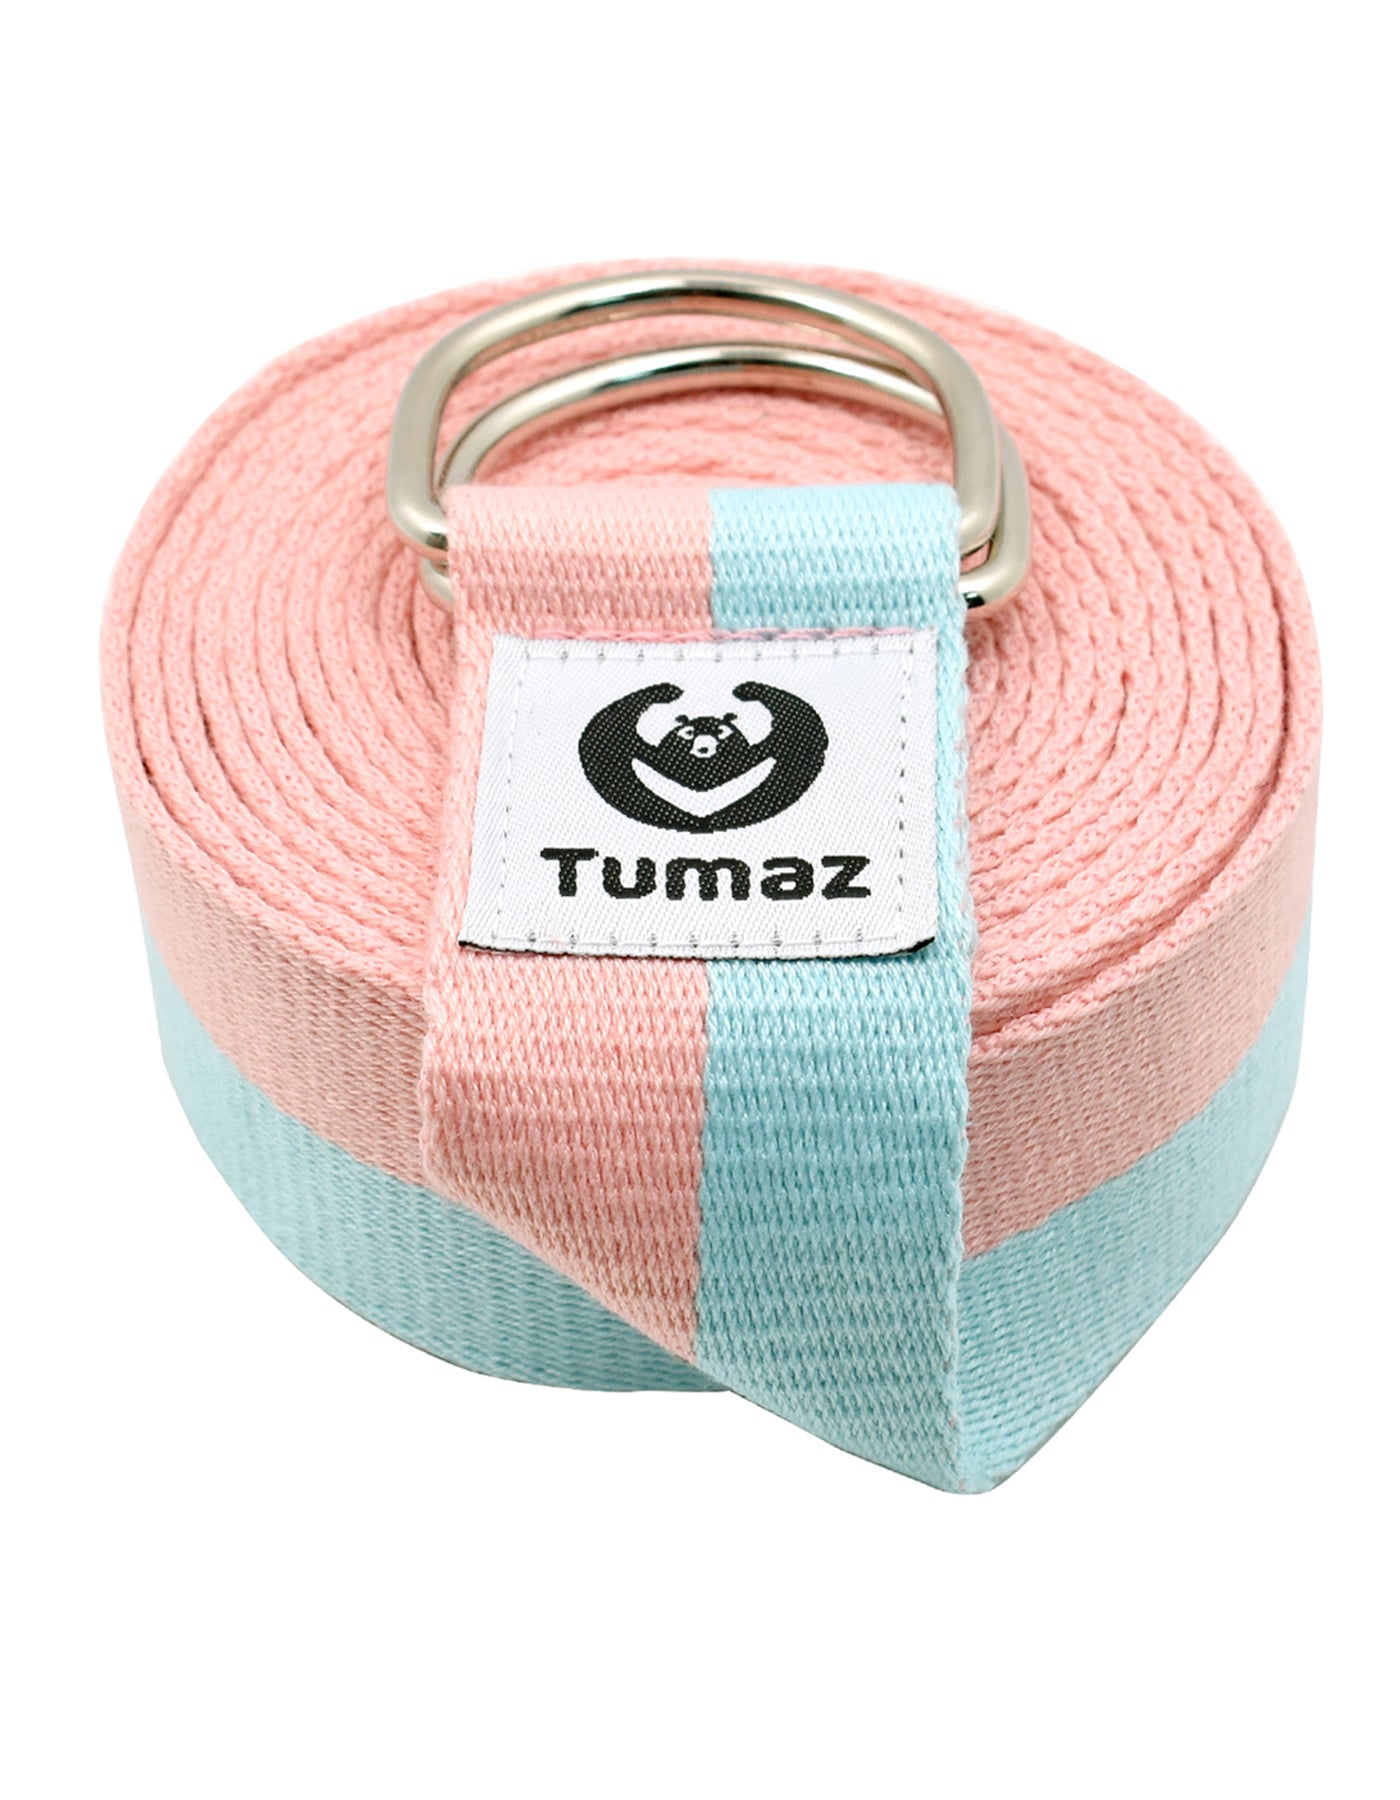 Tumaz Yoga Blocks 2 Pack with Strap, Lightweight Foam Yoga